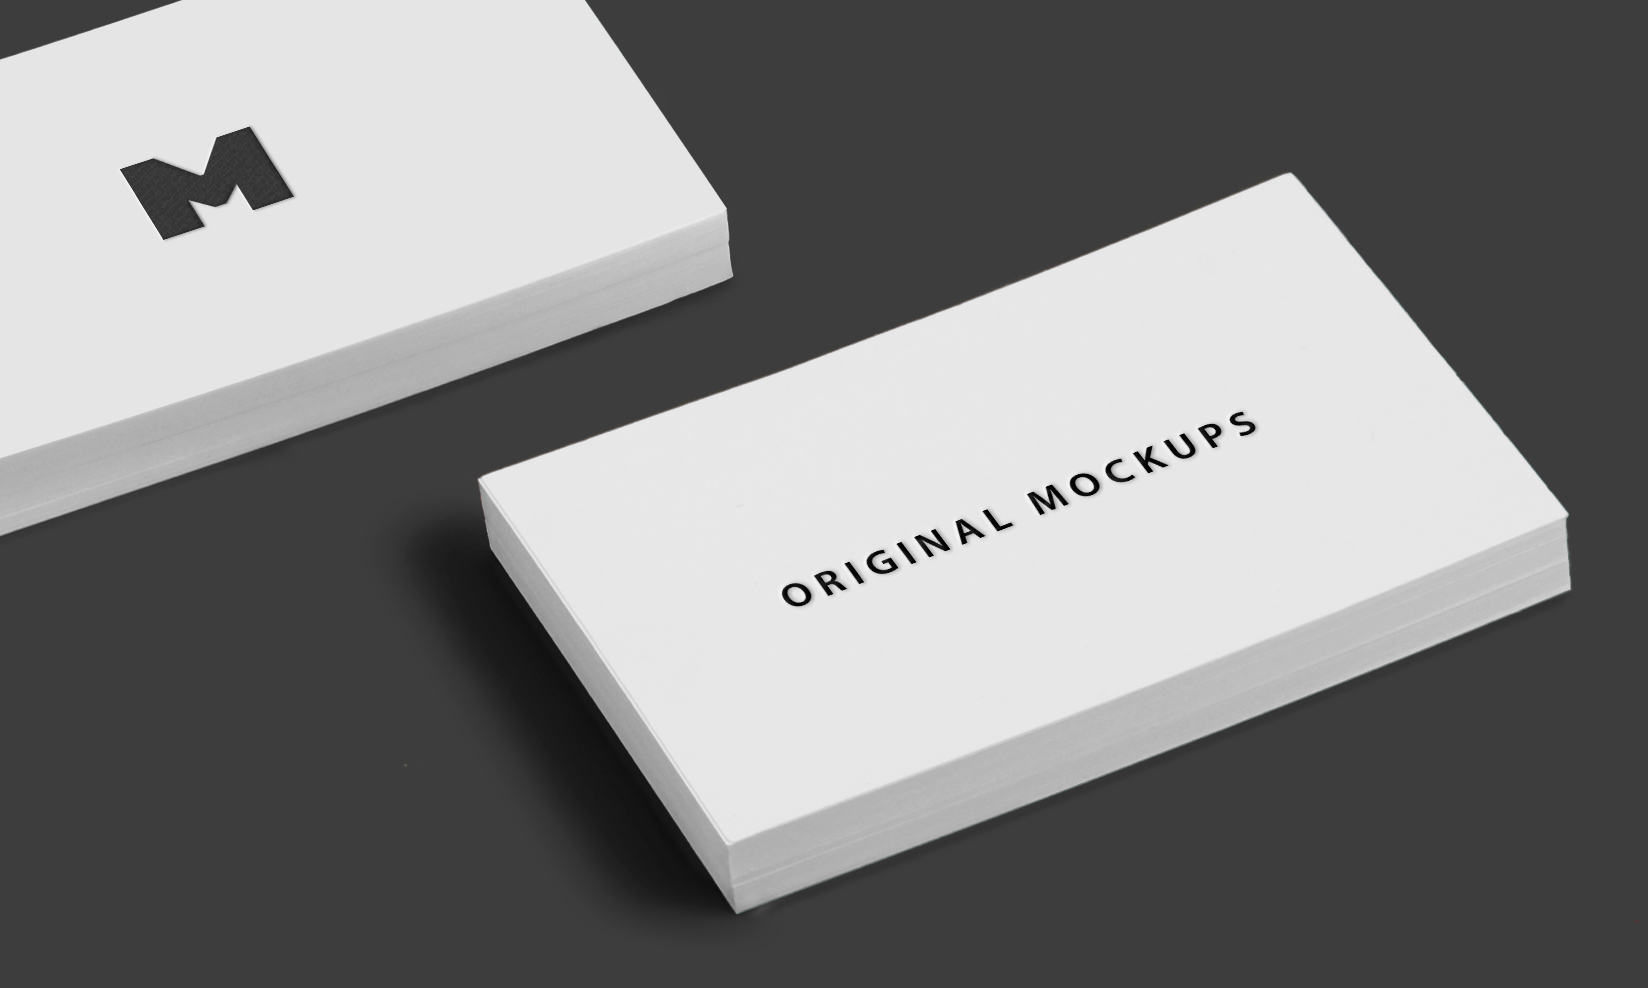 简约风企业名片设计样机模板03 Business Card Mockup 03插图(3)